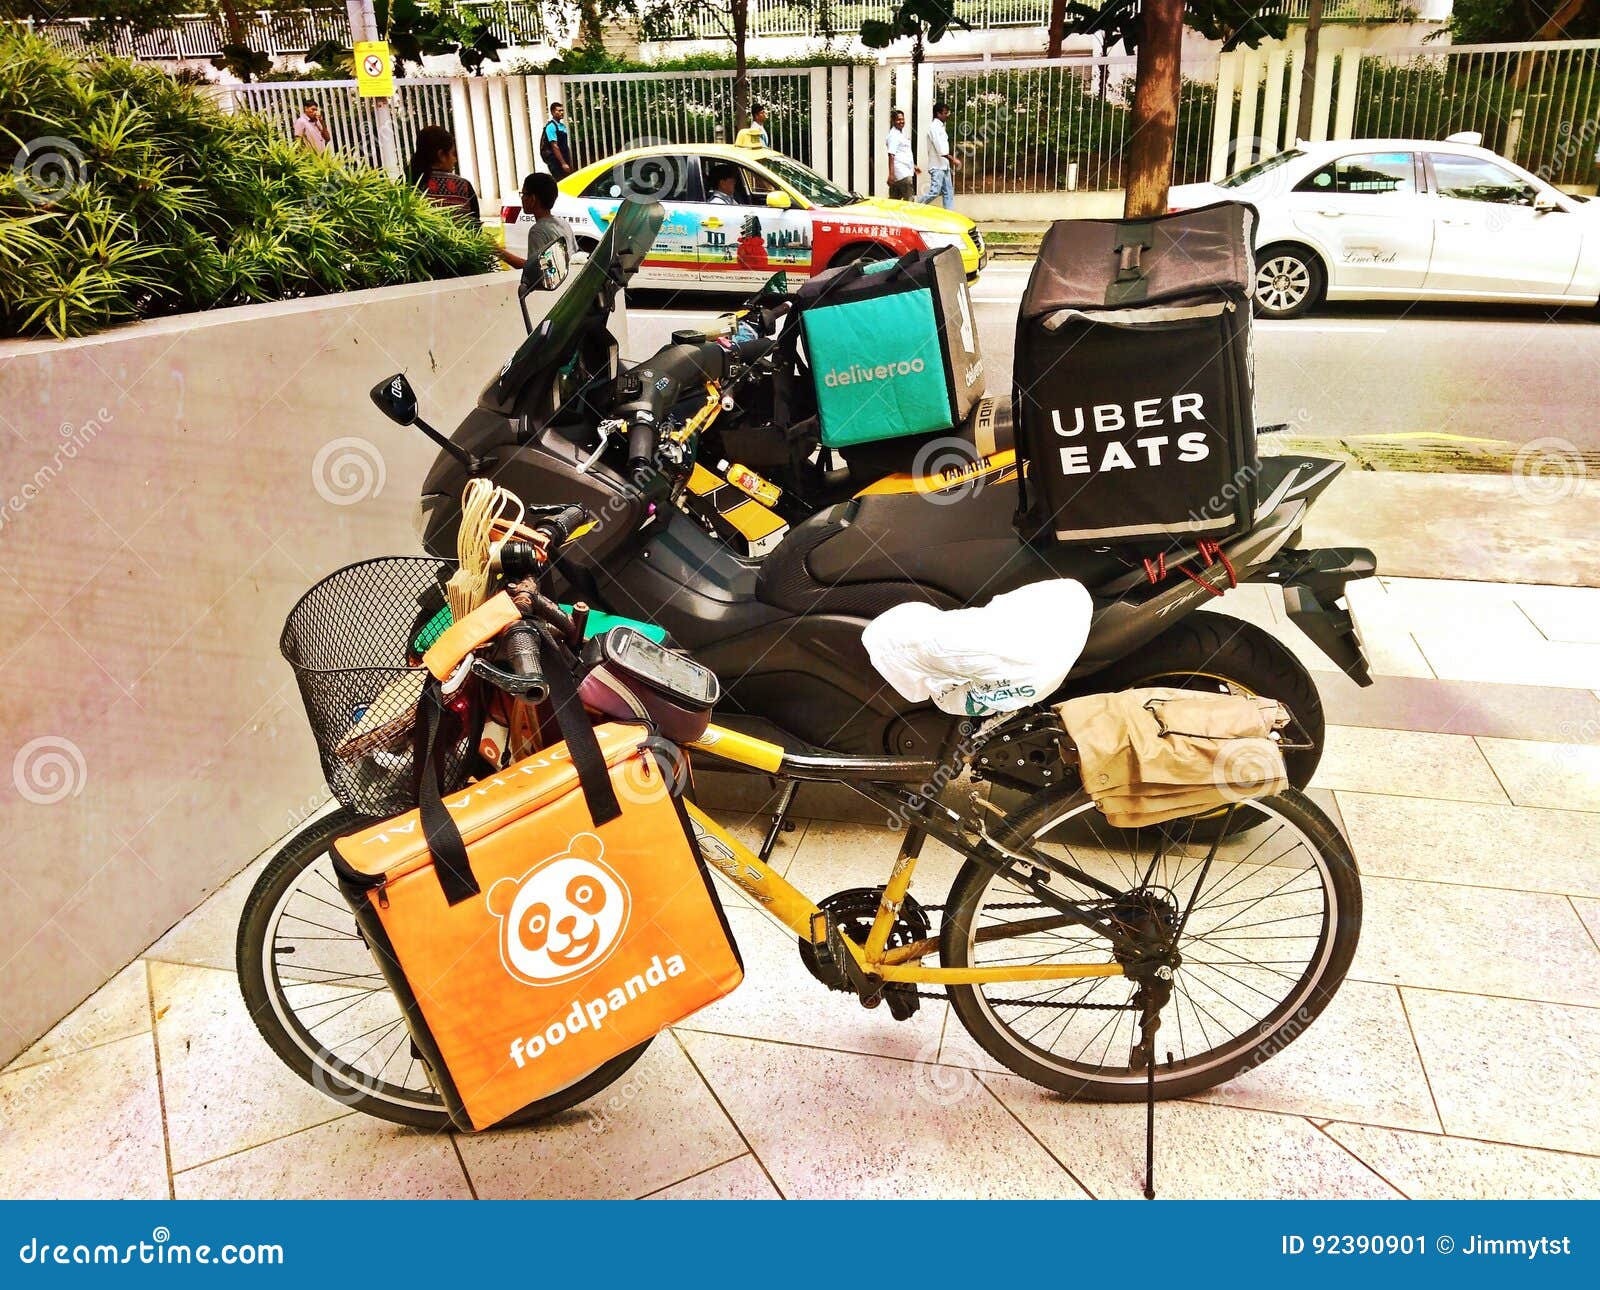 foodpanda delivery bike